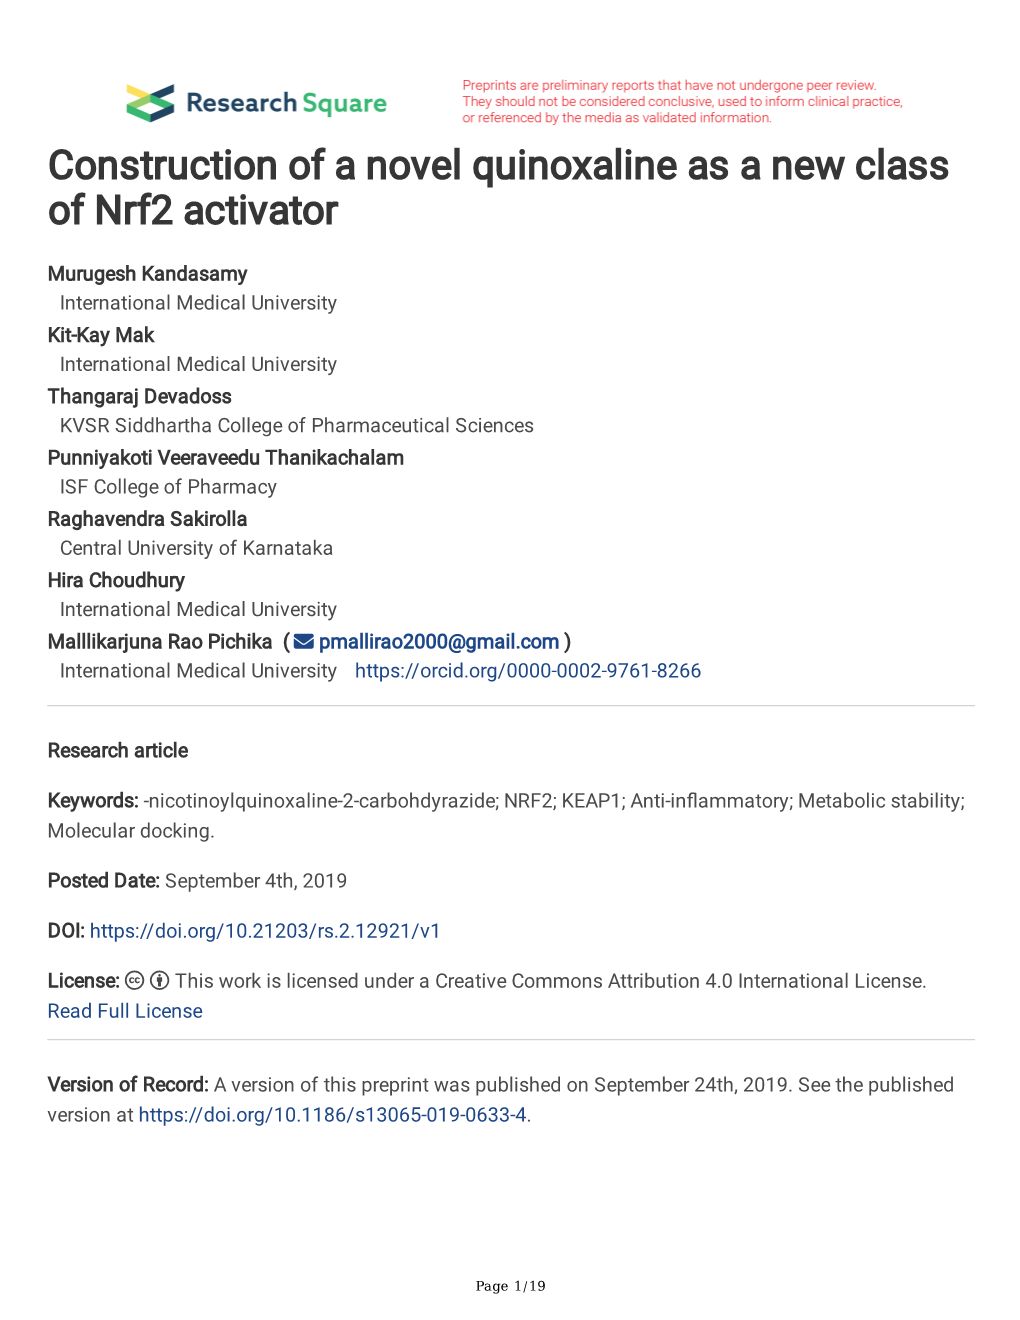 Construction of a Novel Quinoxaline As a New Class of Nrf2 Activator